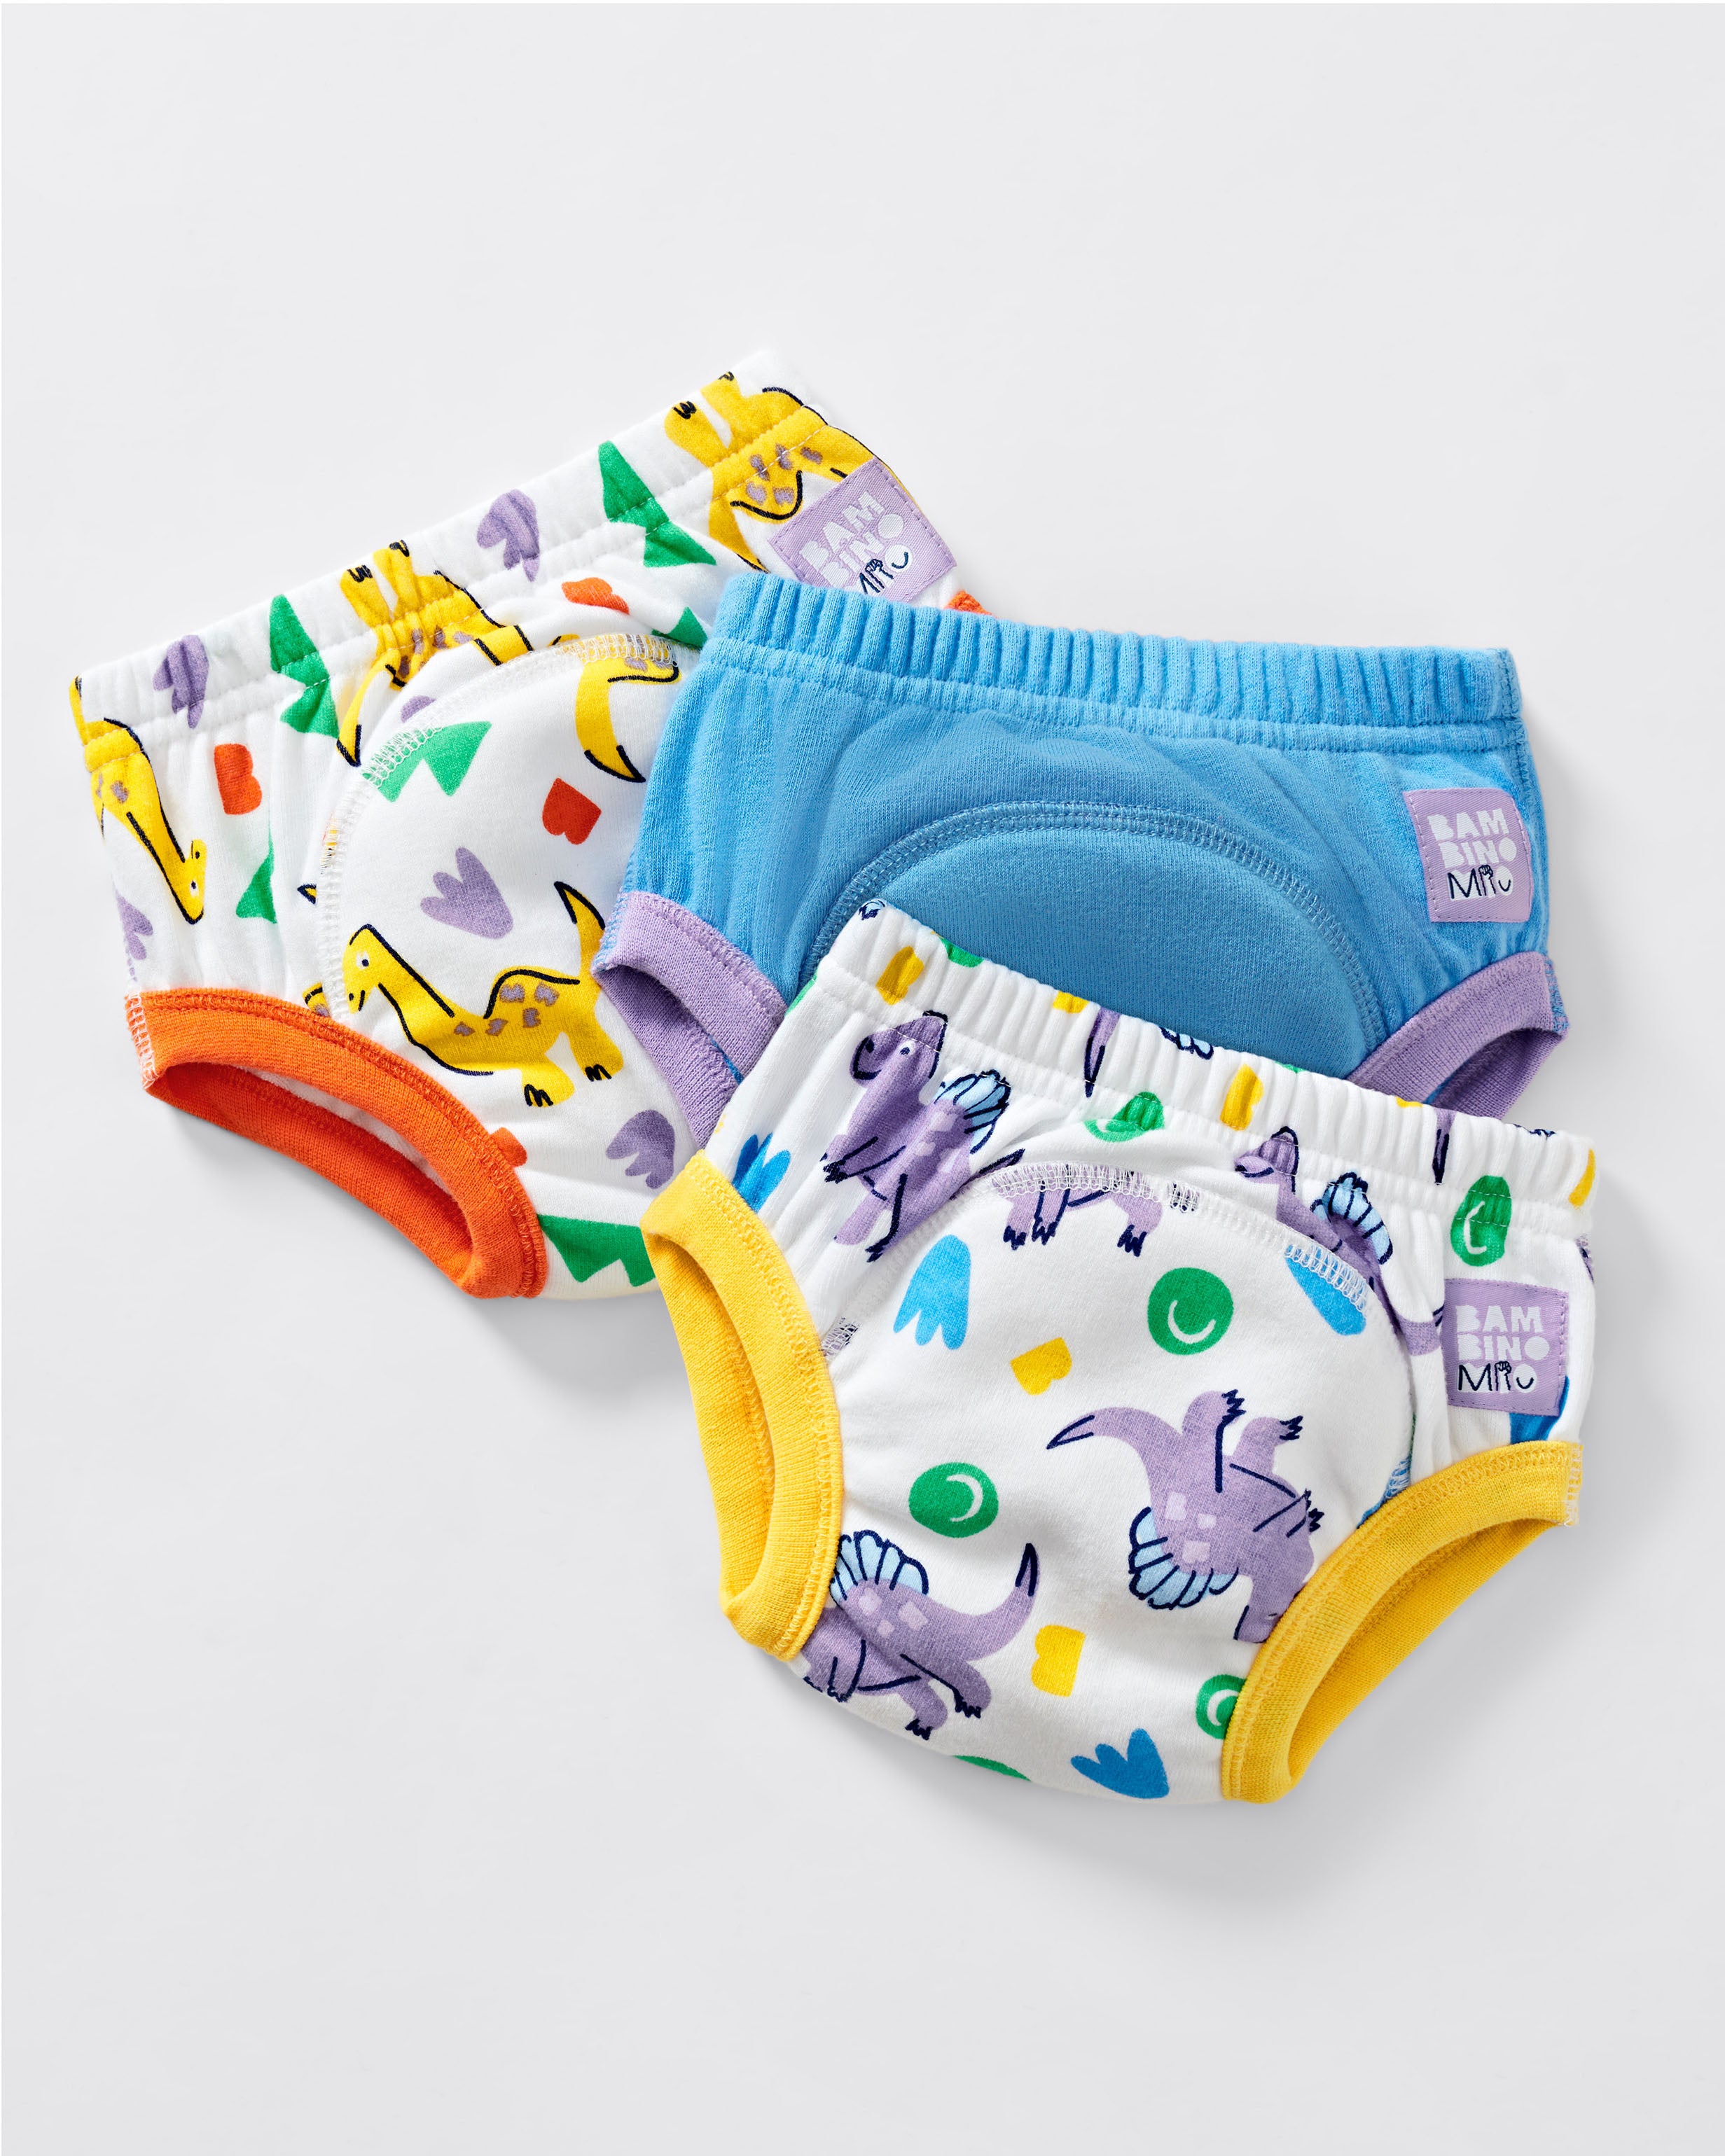 Baby Potty Training Pants Kids Skirts Reusable Kids Potty Training Pants  Waterproof Diaper Training Baby Training Pants